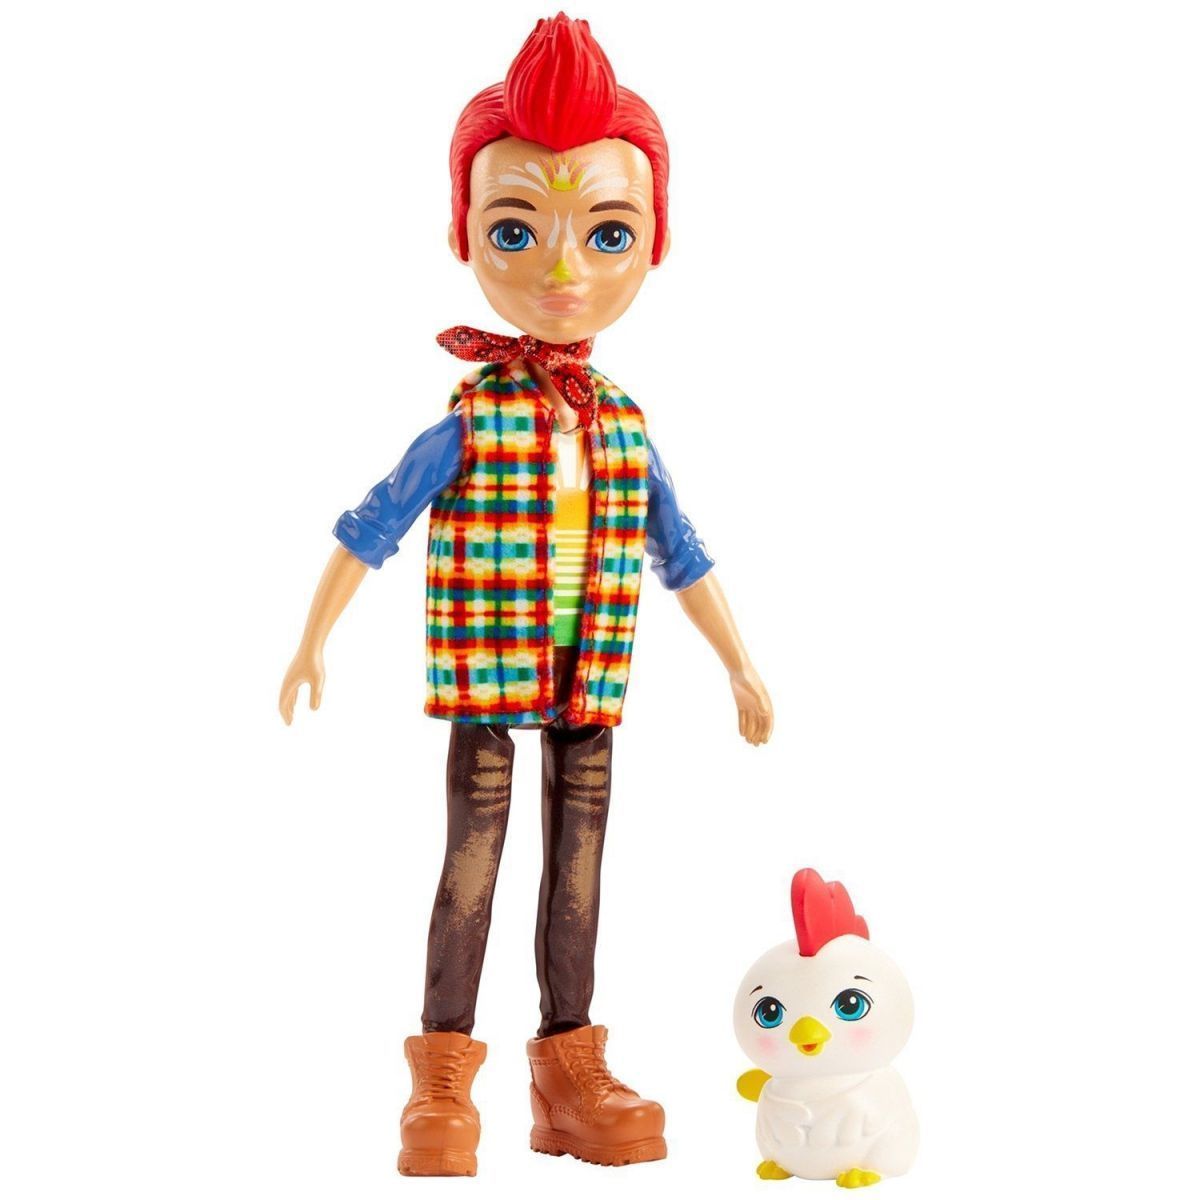 Кукла Enchantimals с питомцем Redward Rooster & Cluck